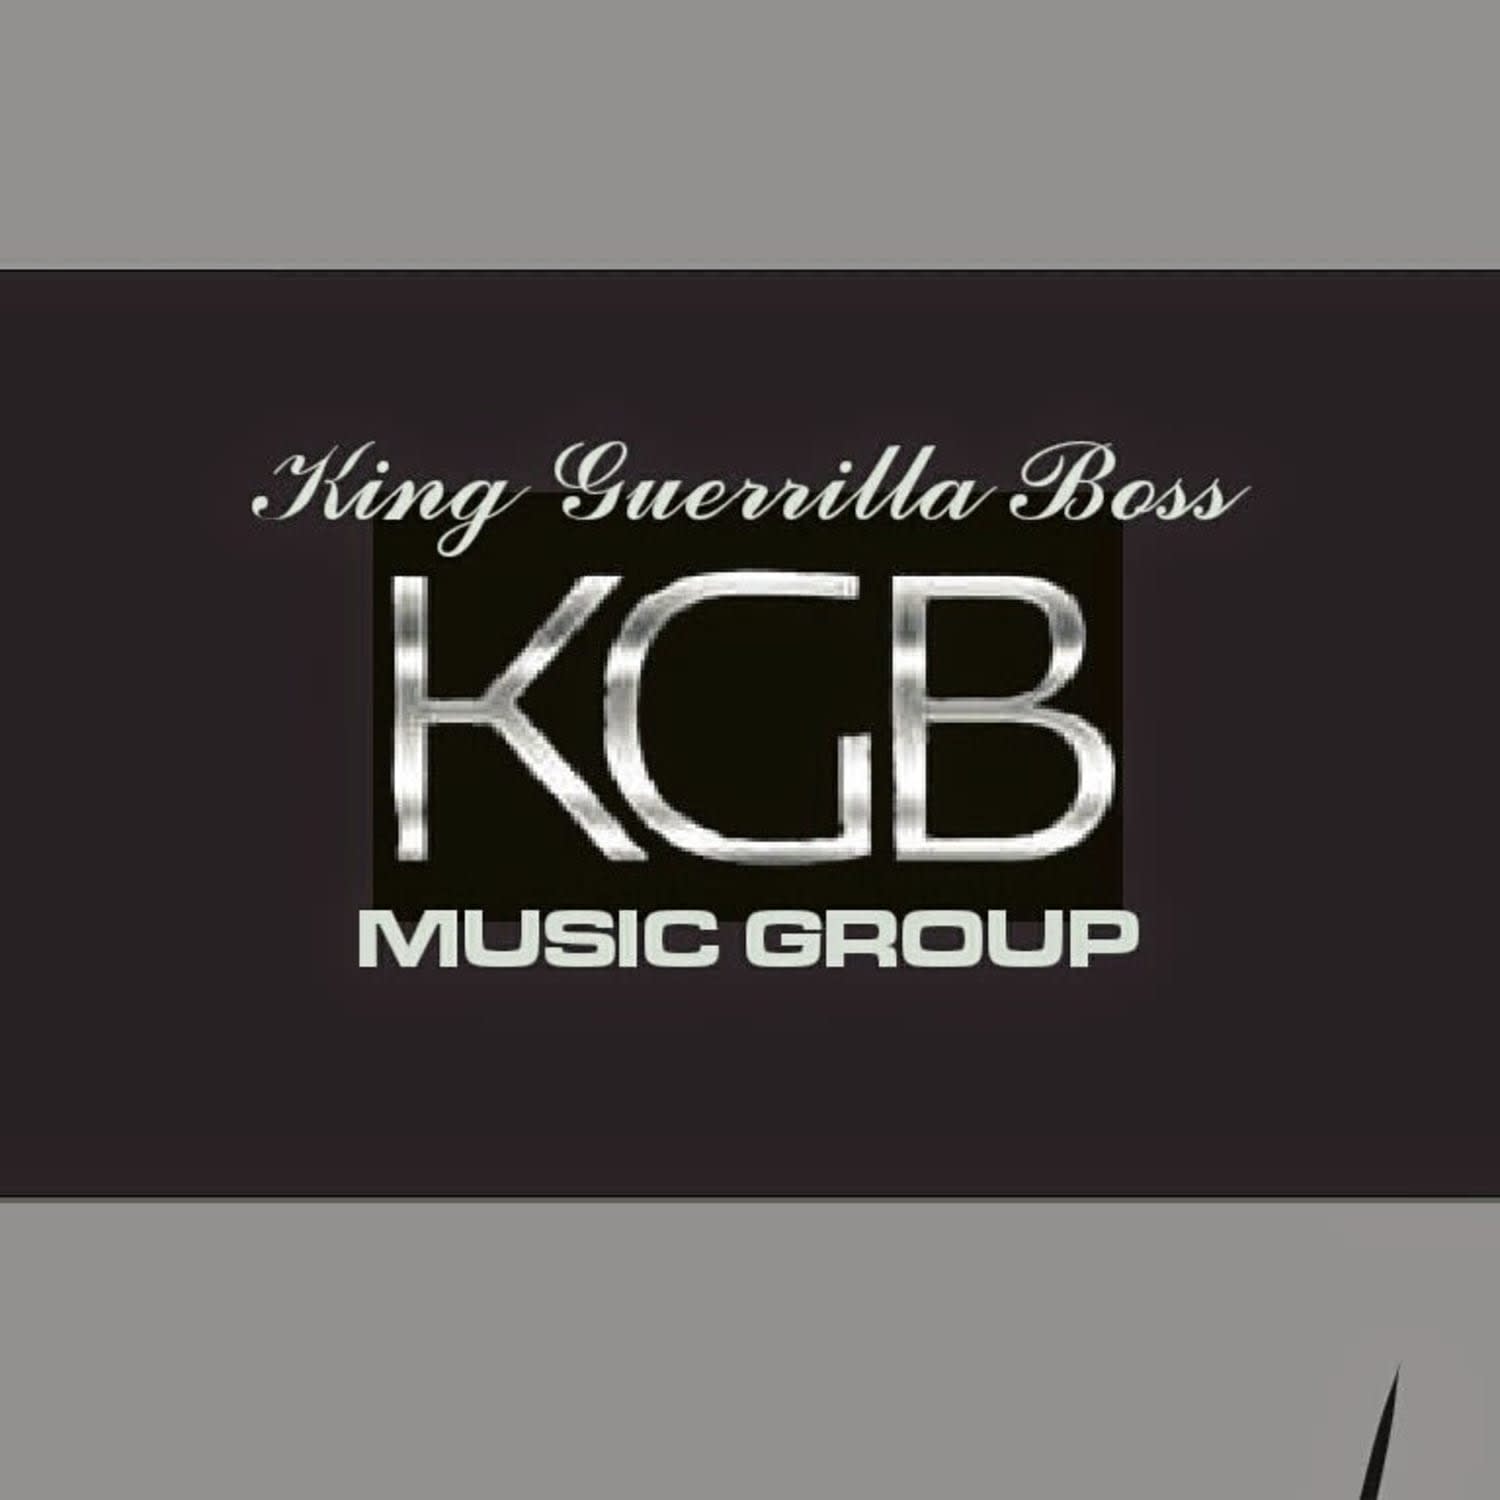 King Guerrilla Boss Entertainment